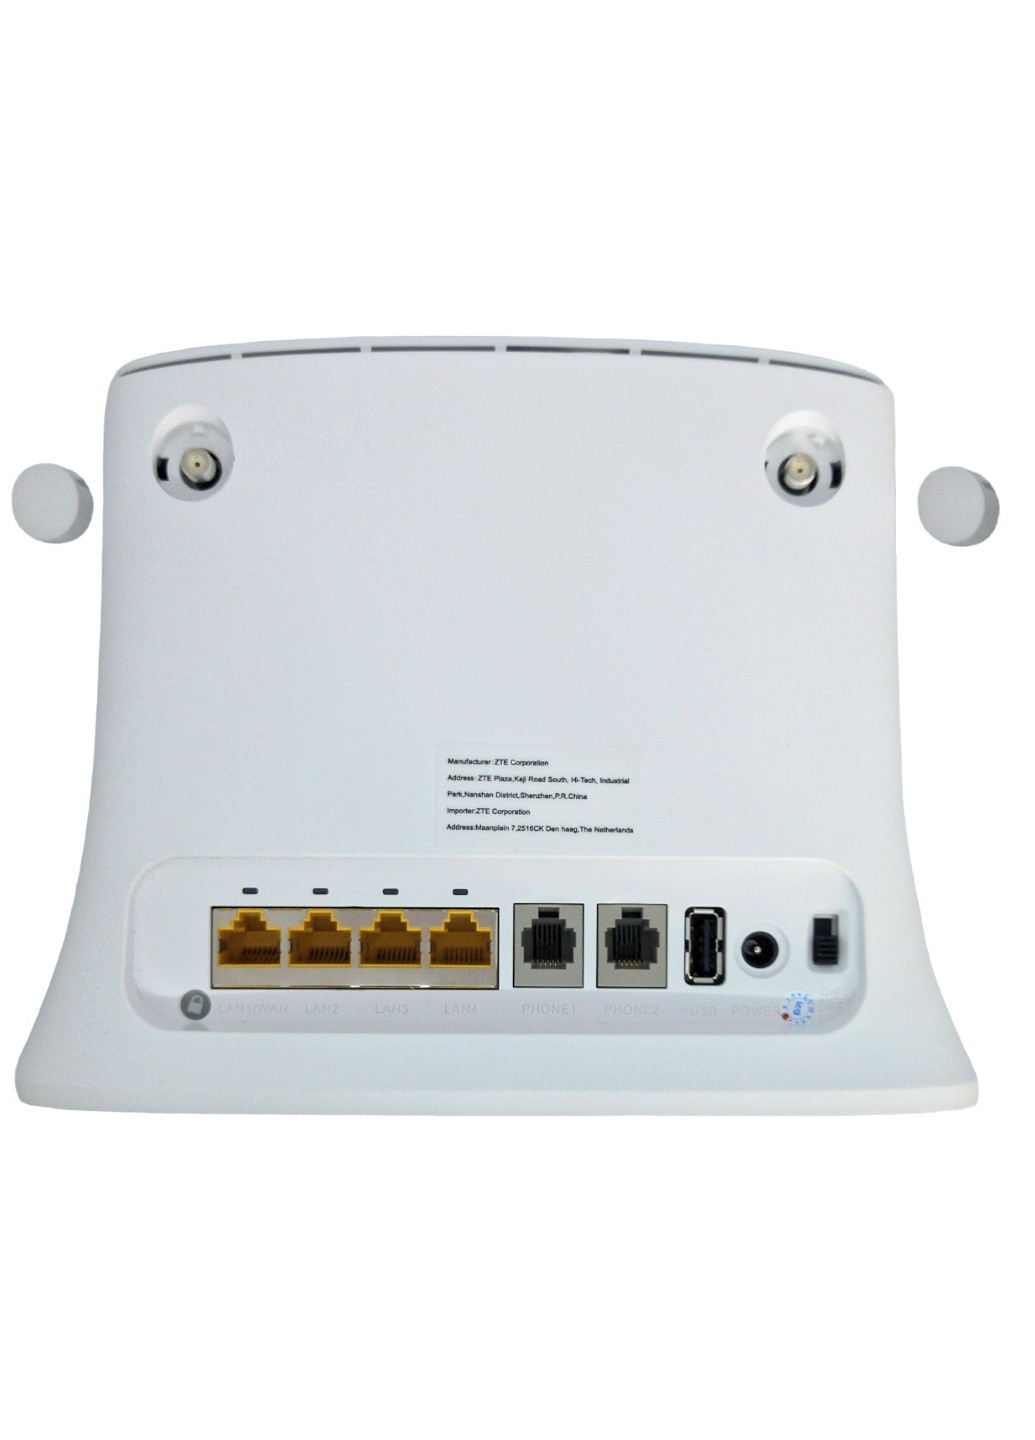 4G WIFI роутер модем маршрутизатор с 3G 4G модемом + два выхода под антенну ZTE mf 283 v (259663981)